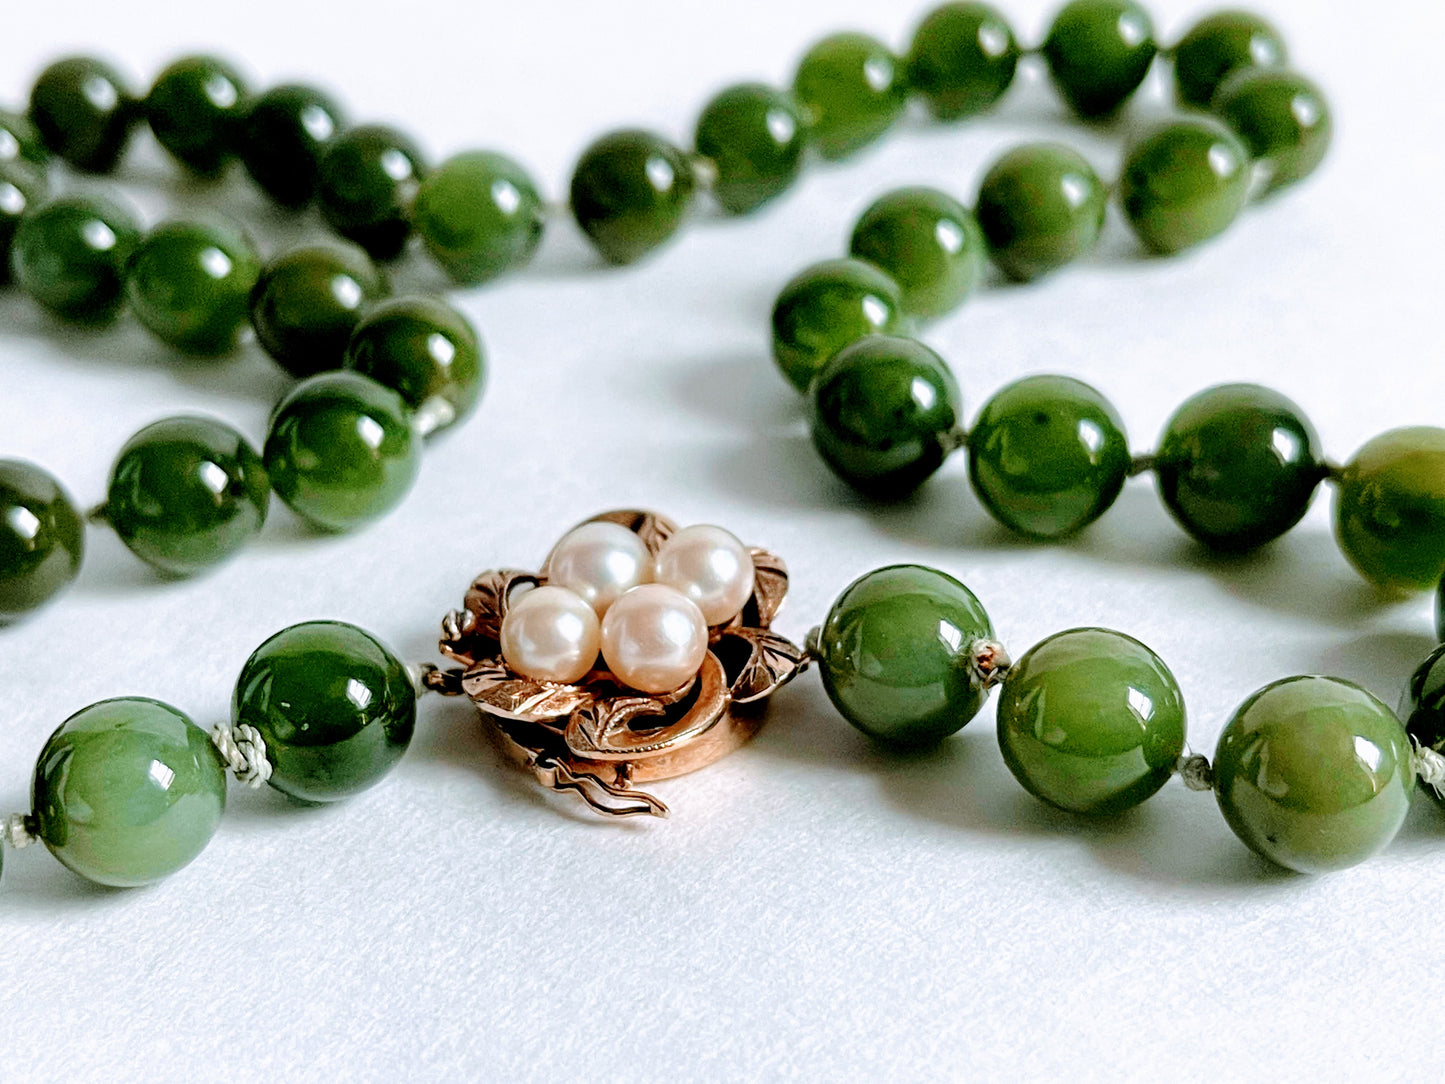 A jade nephrite necklace